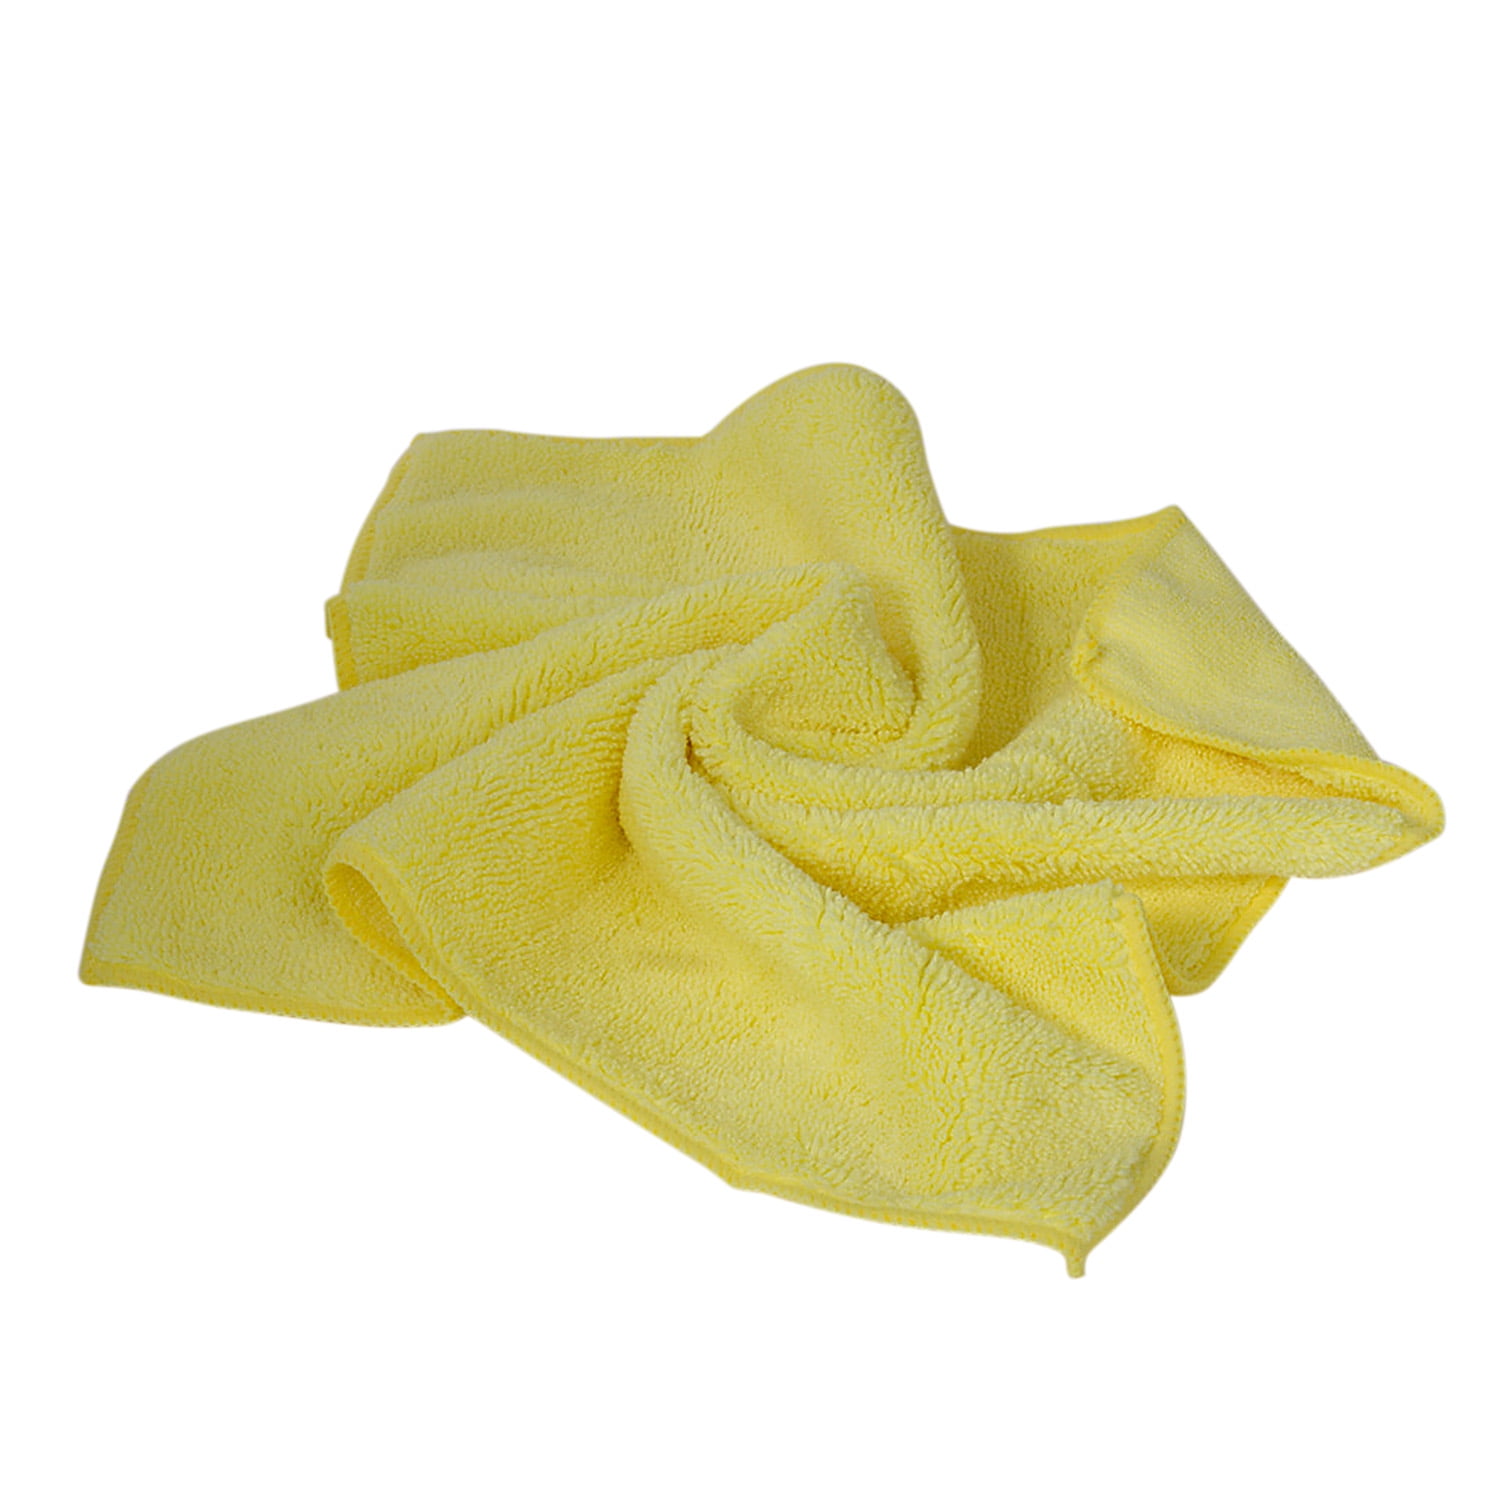 Microfiber Cleaning Cloth Towel Rag Car Polishing No Scratch Detailing Set of 50 